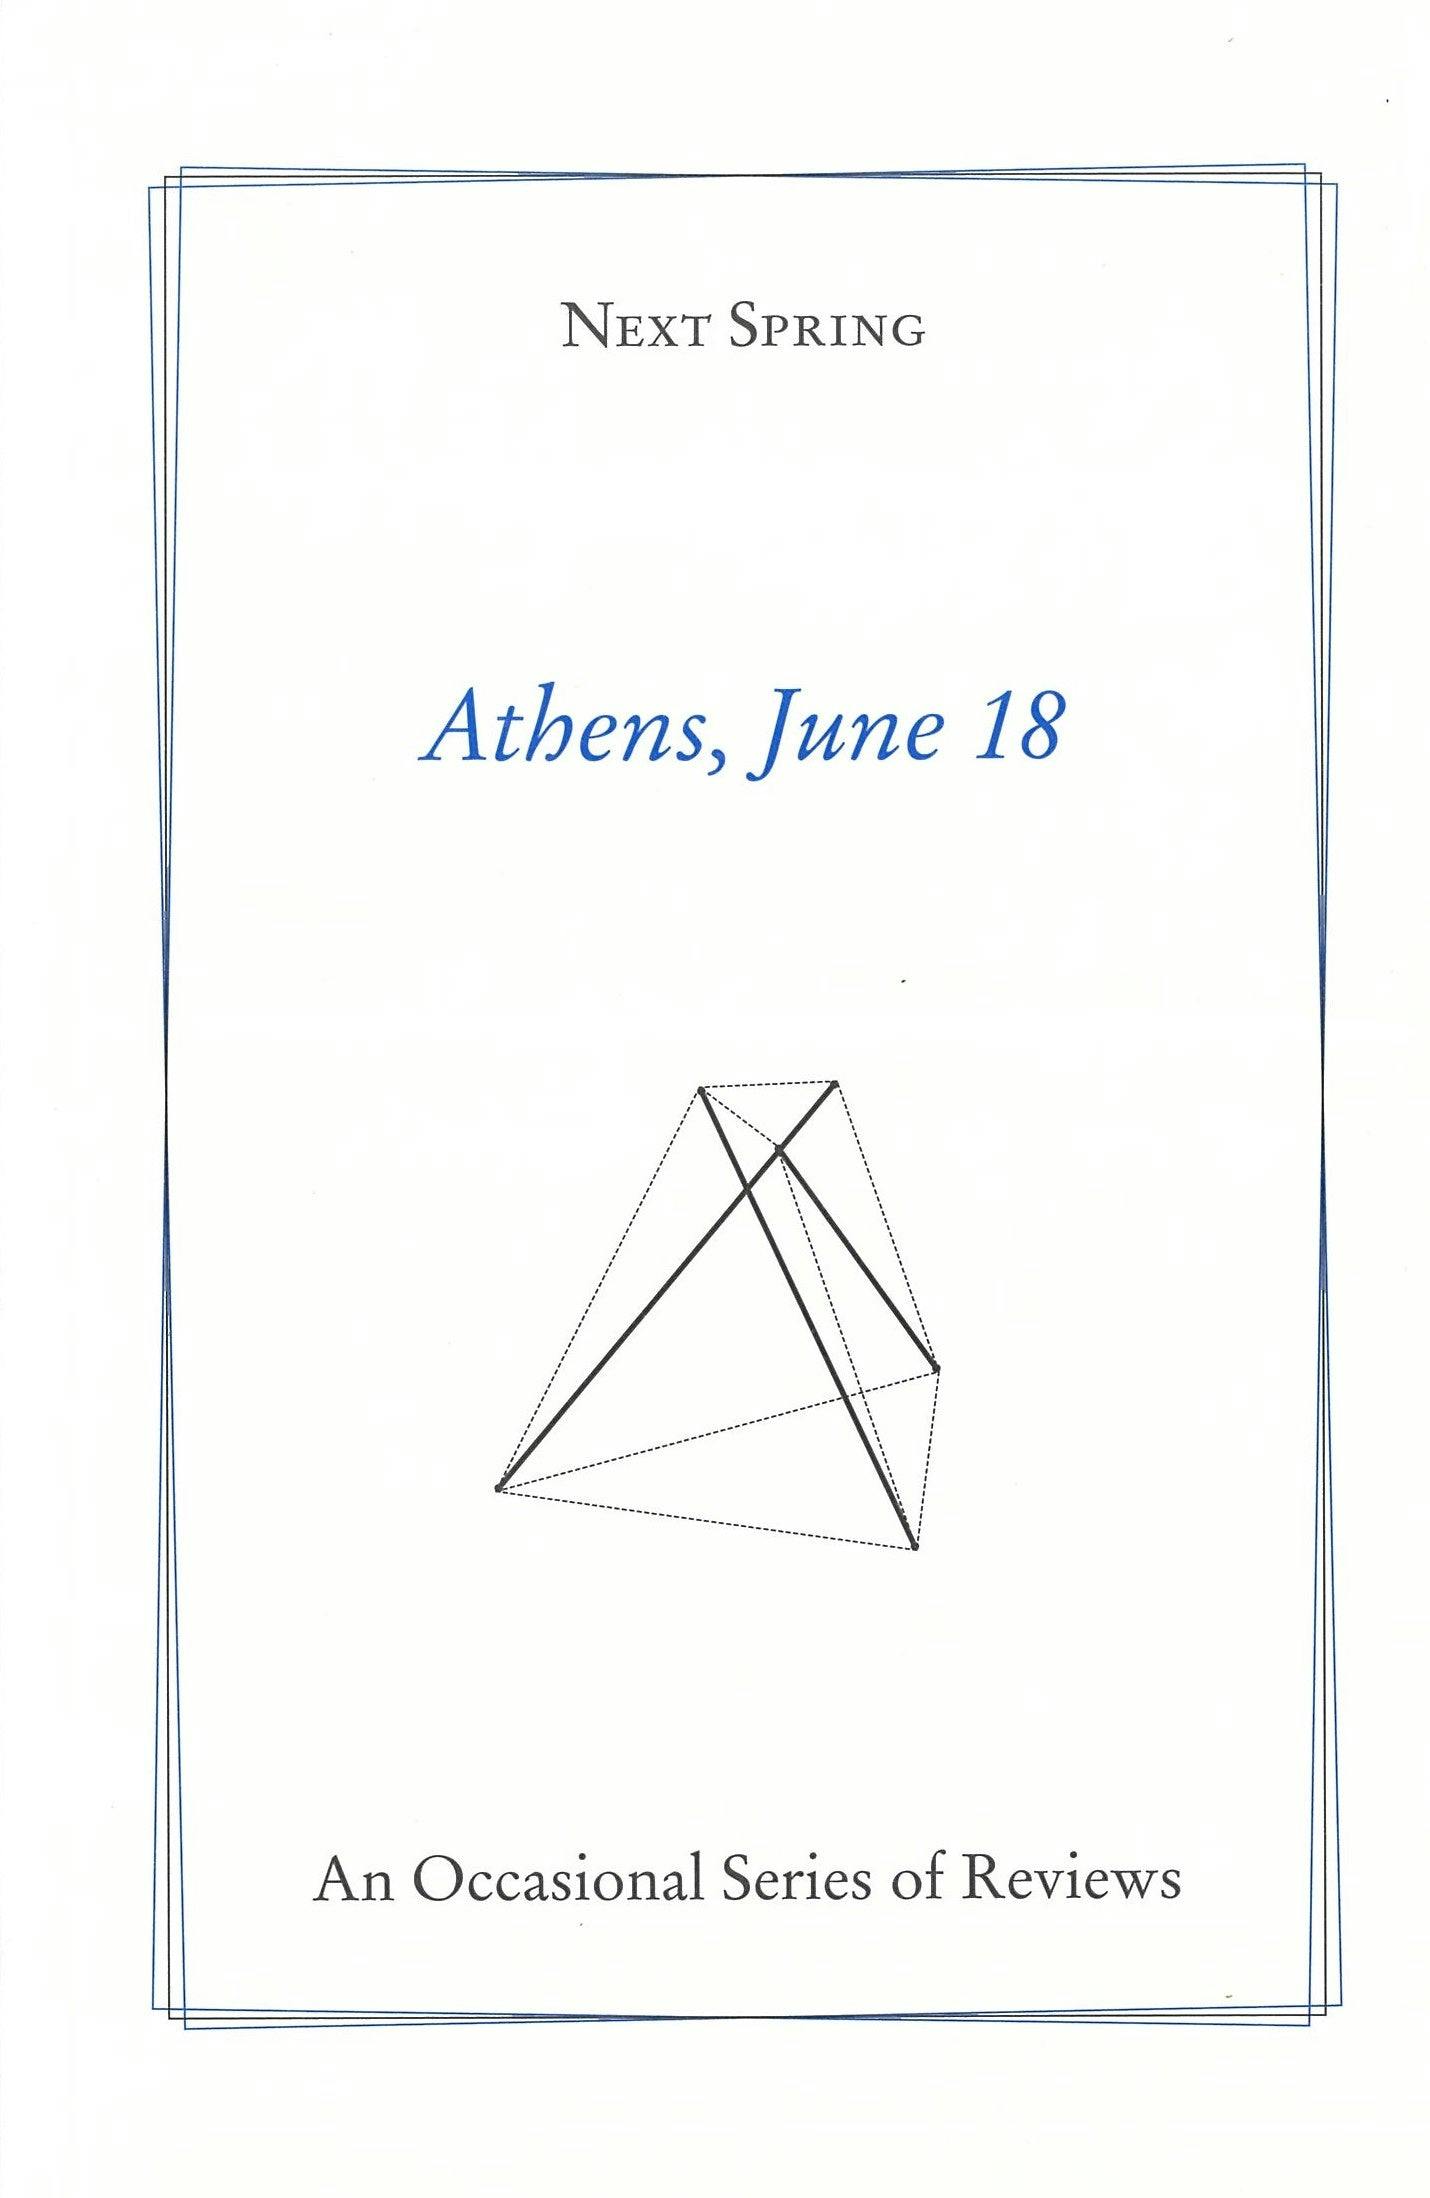 Next Spring: Elena Parpa, Athens, June 2018